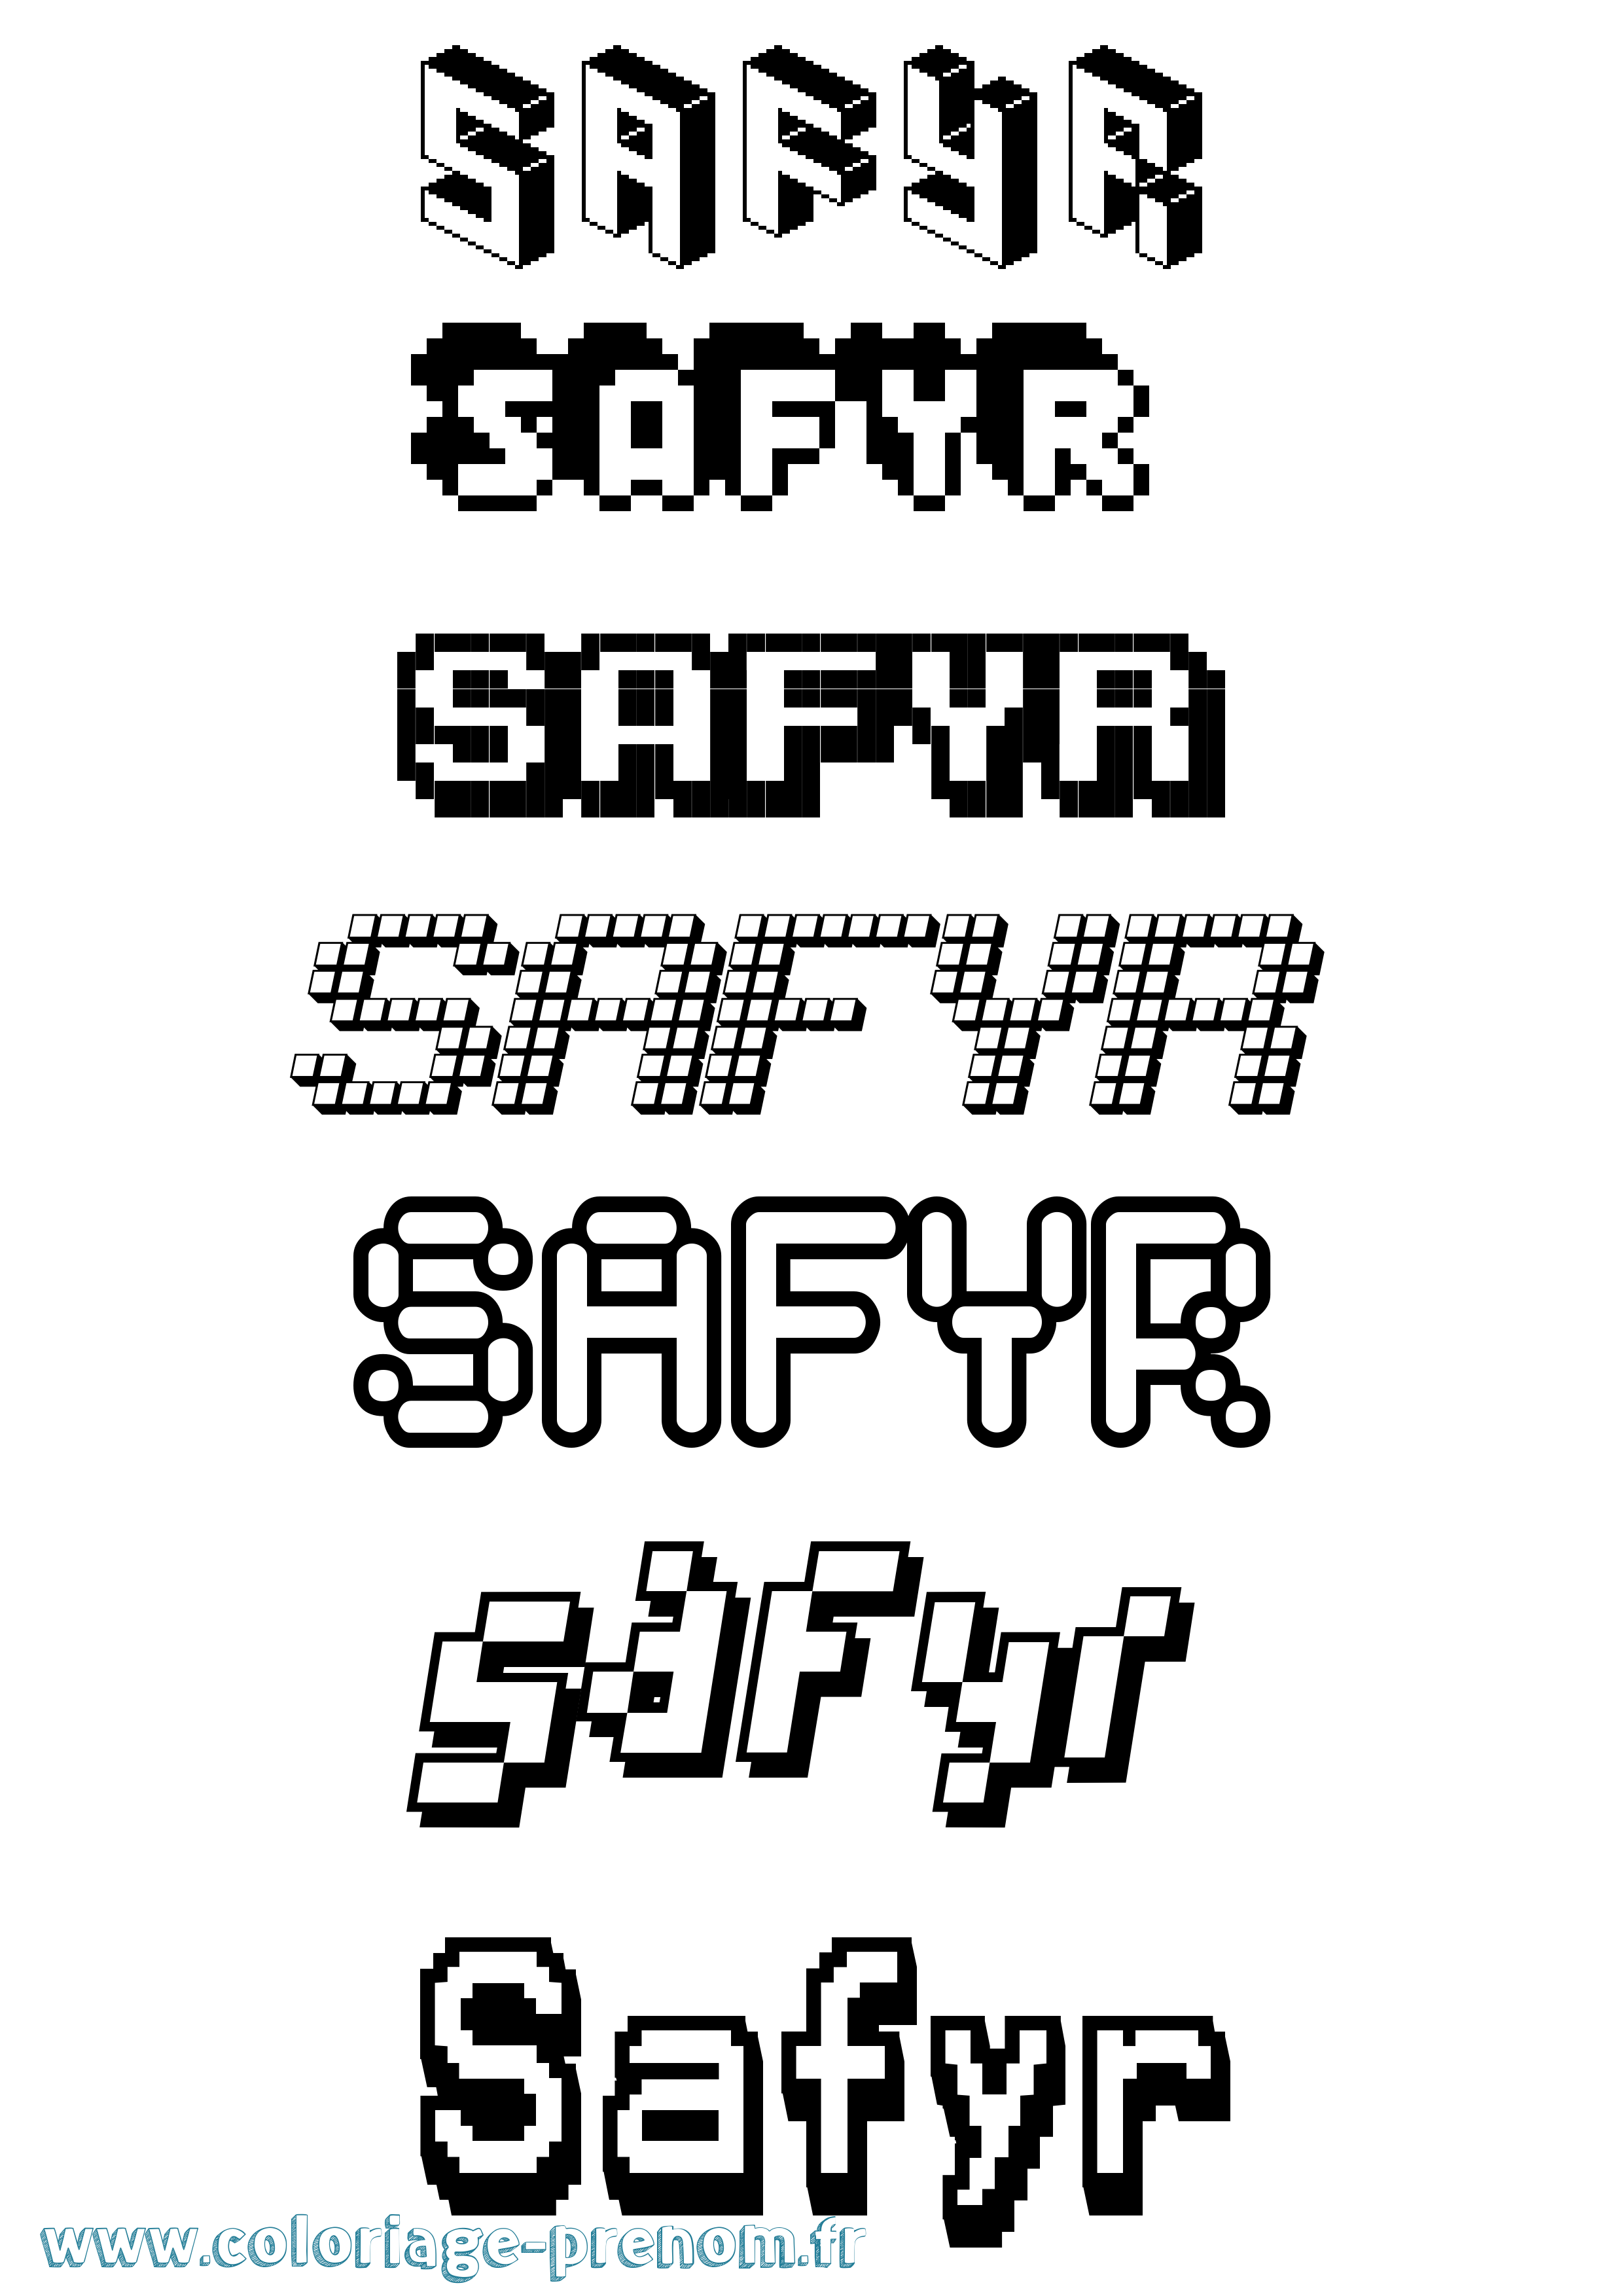 Coloriage prénom Safyr Pixel